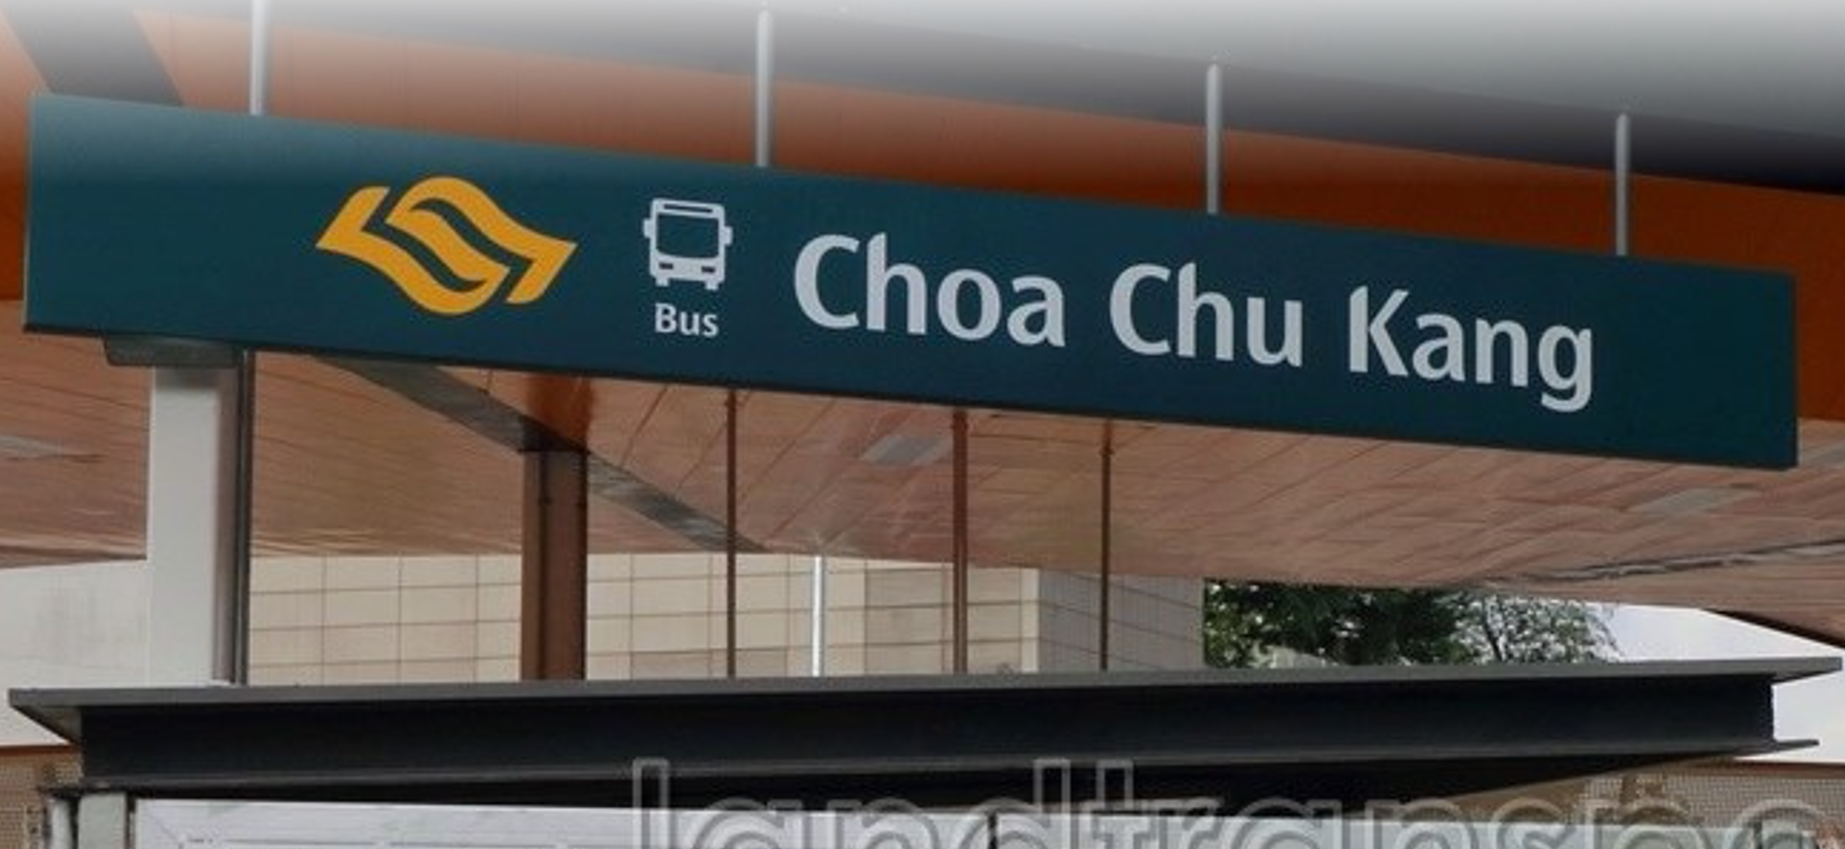 Choa Chu Kang Sign